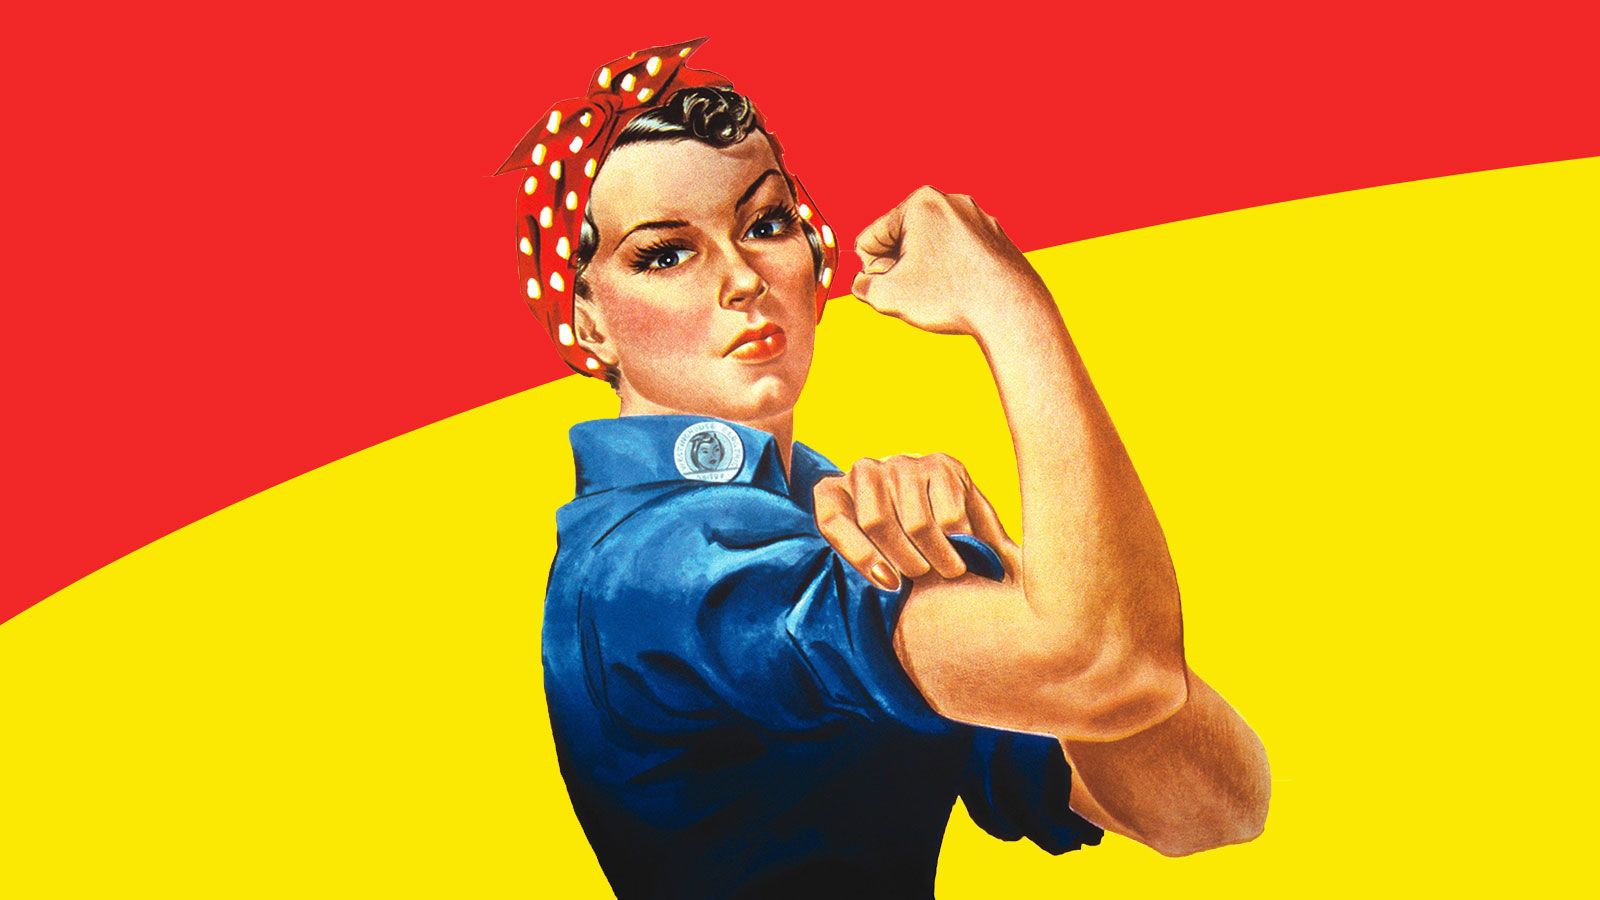 We can do a lot. Клепальщицы Рози (Rosie the Riveter). Клепальщица Ро́узи. Клепальщица Рози плакат. Женщина с плакатом.